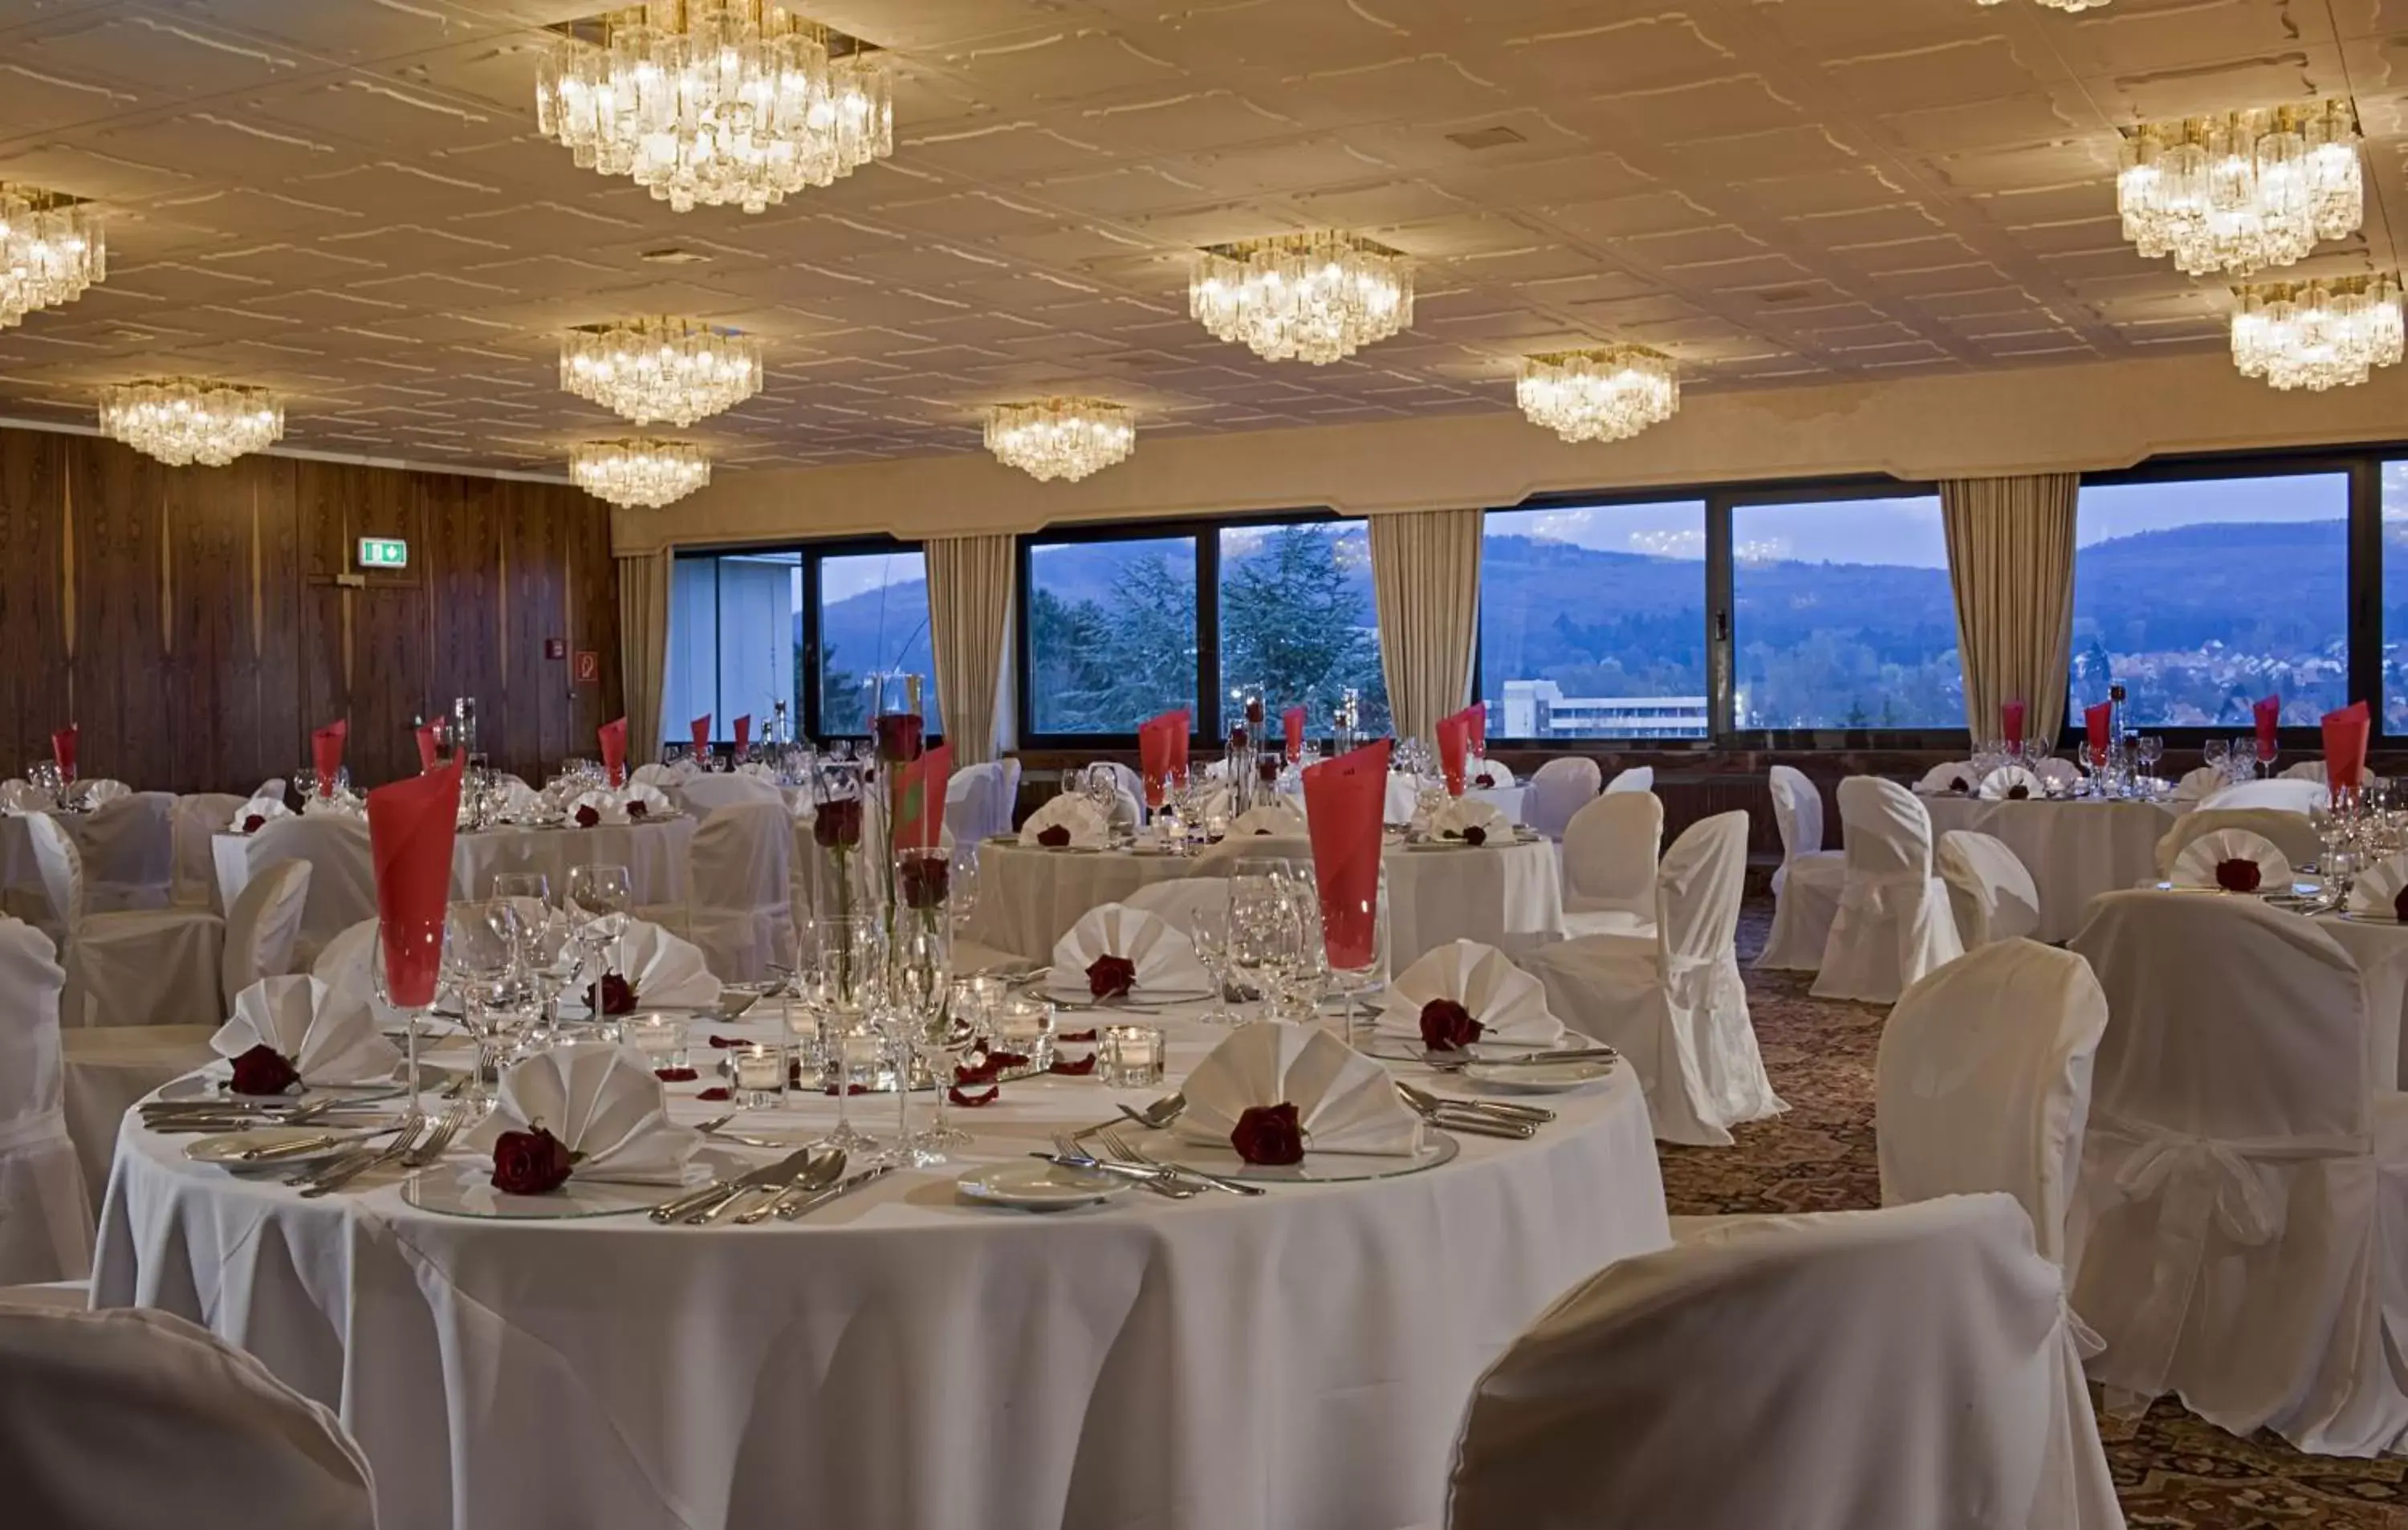 Meeting/conference room, Banquet Facilities in Maritim Hotel Bad Salzuflen